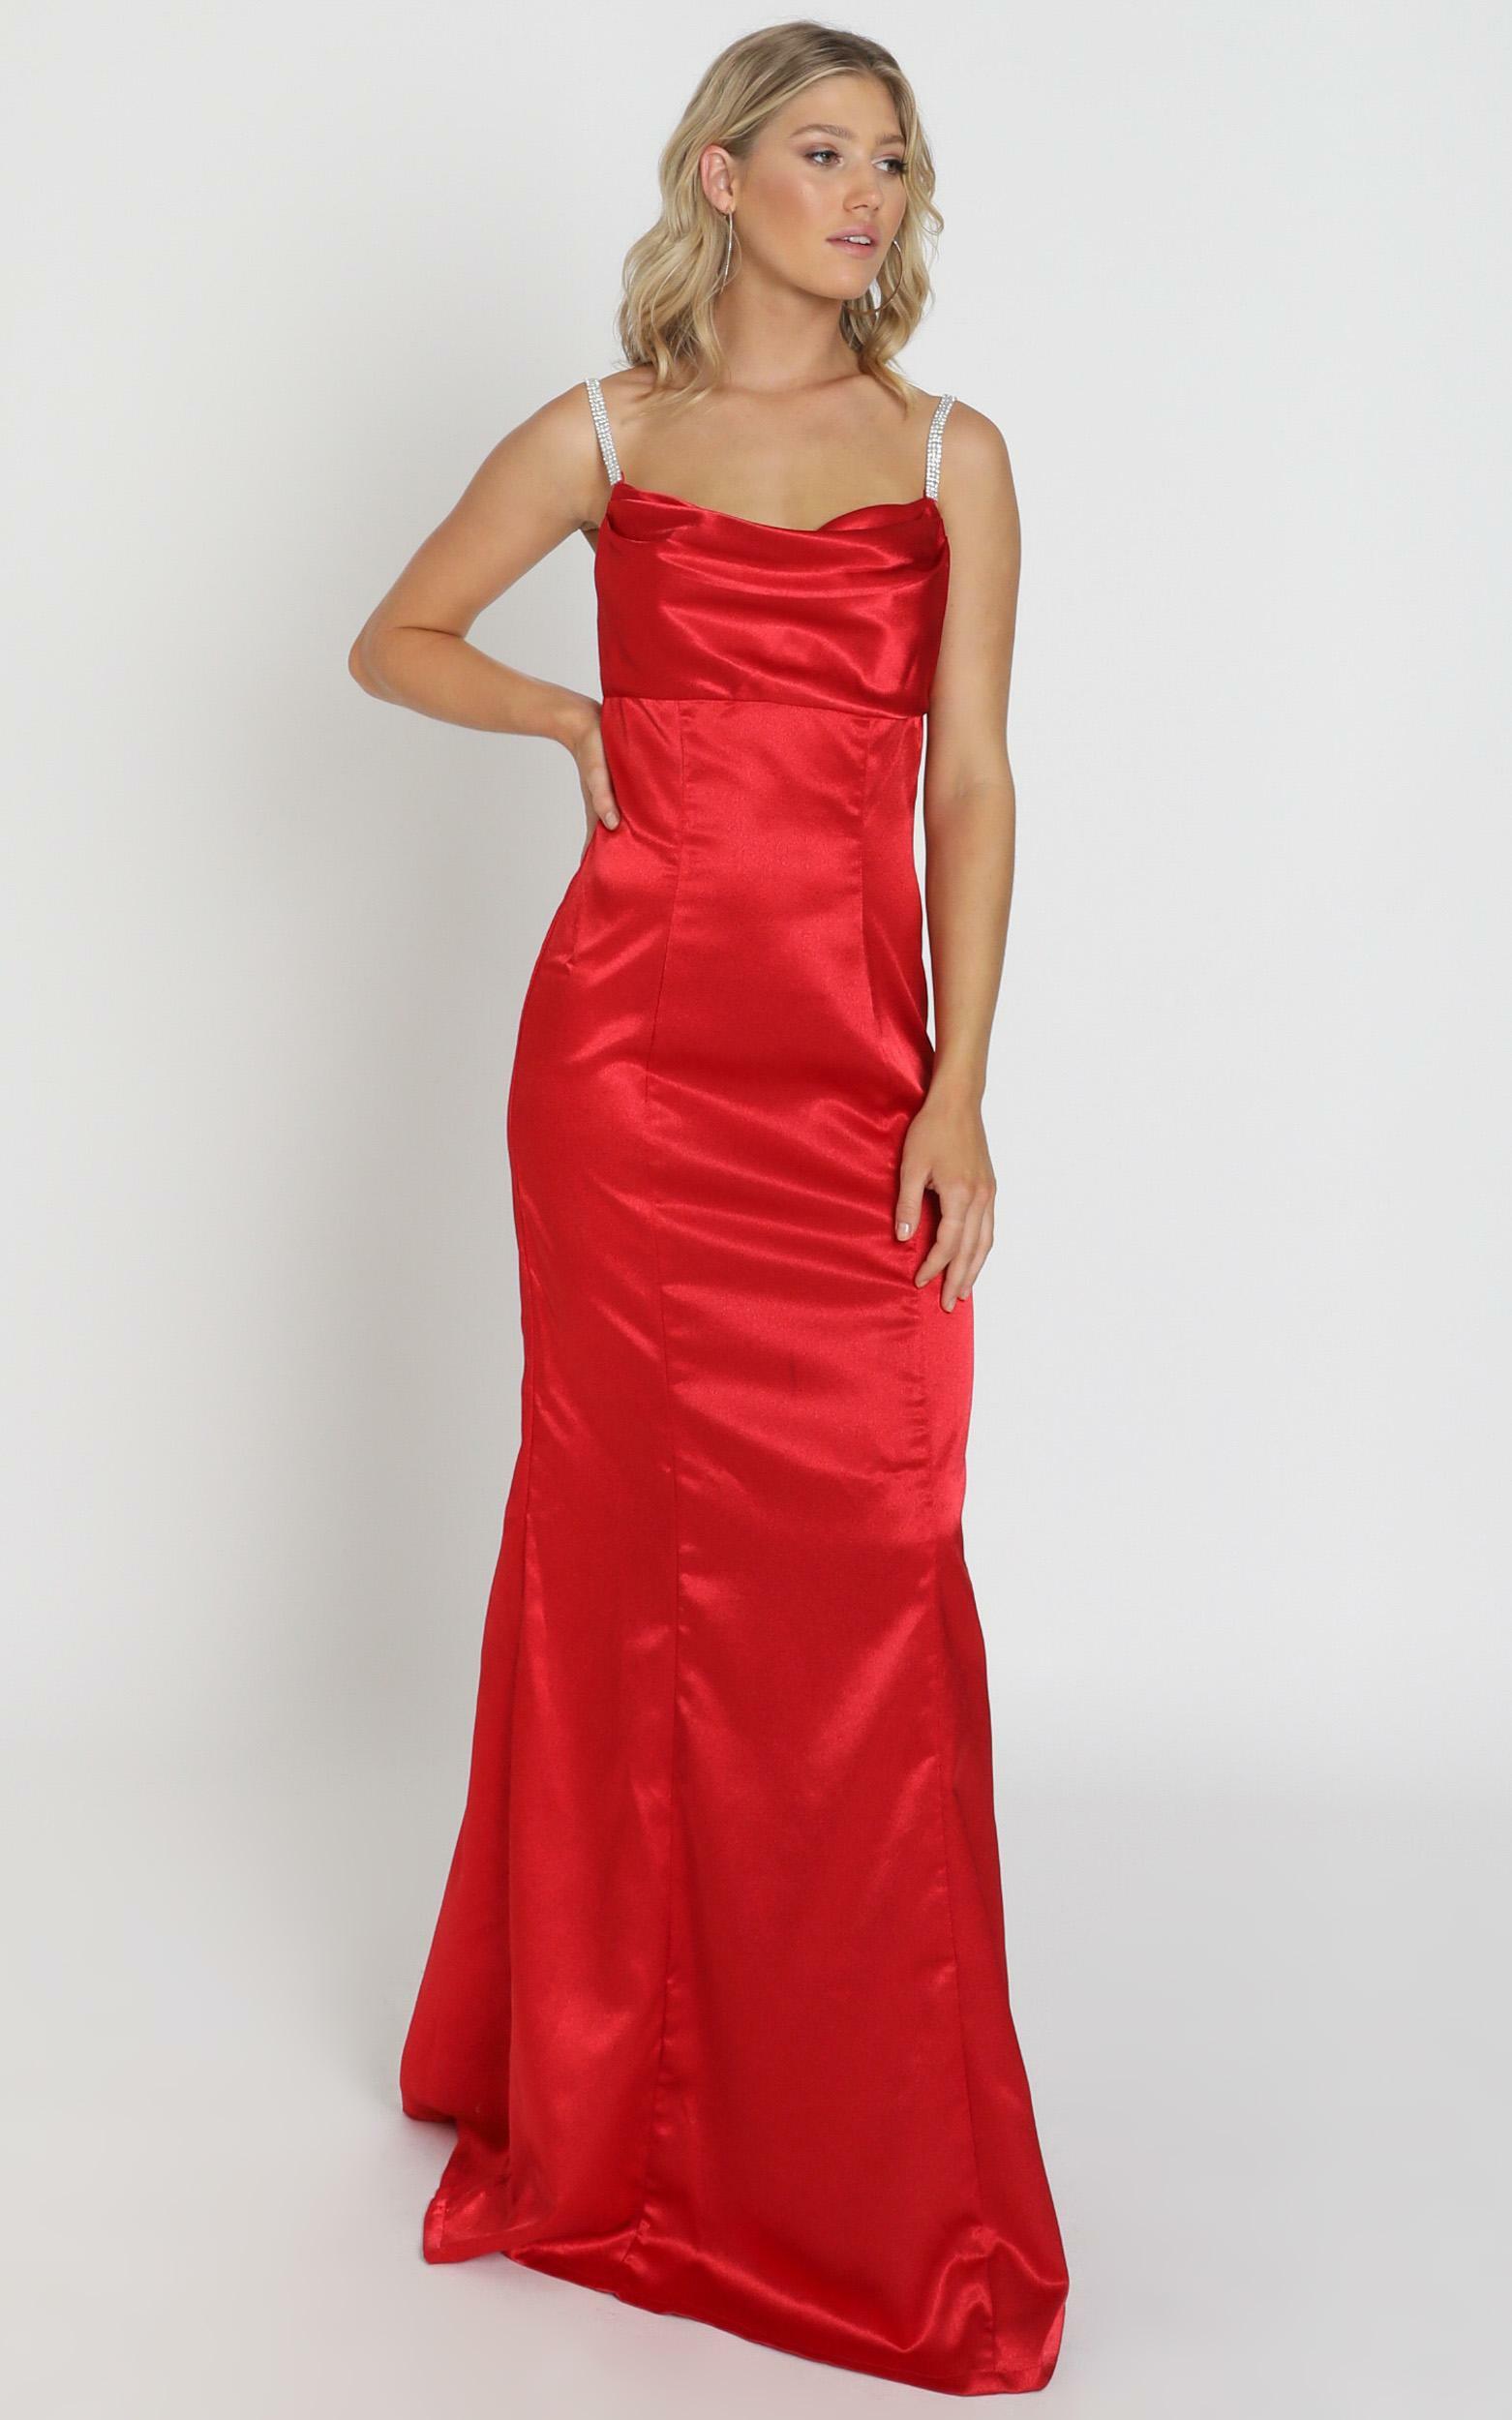 Alysha Diamante Strap Maxi Dress In red satin - 8 (S), Red, hi-res image number null